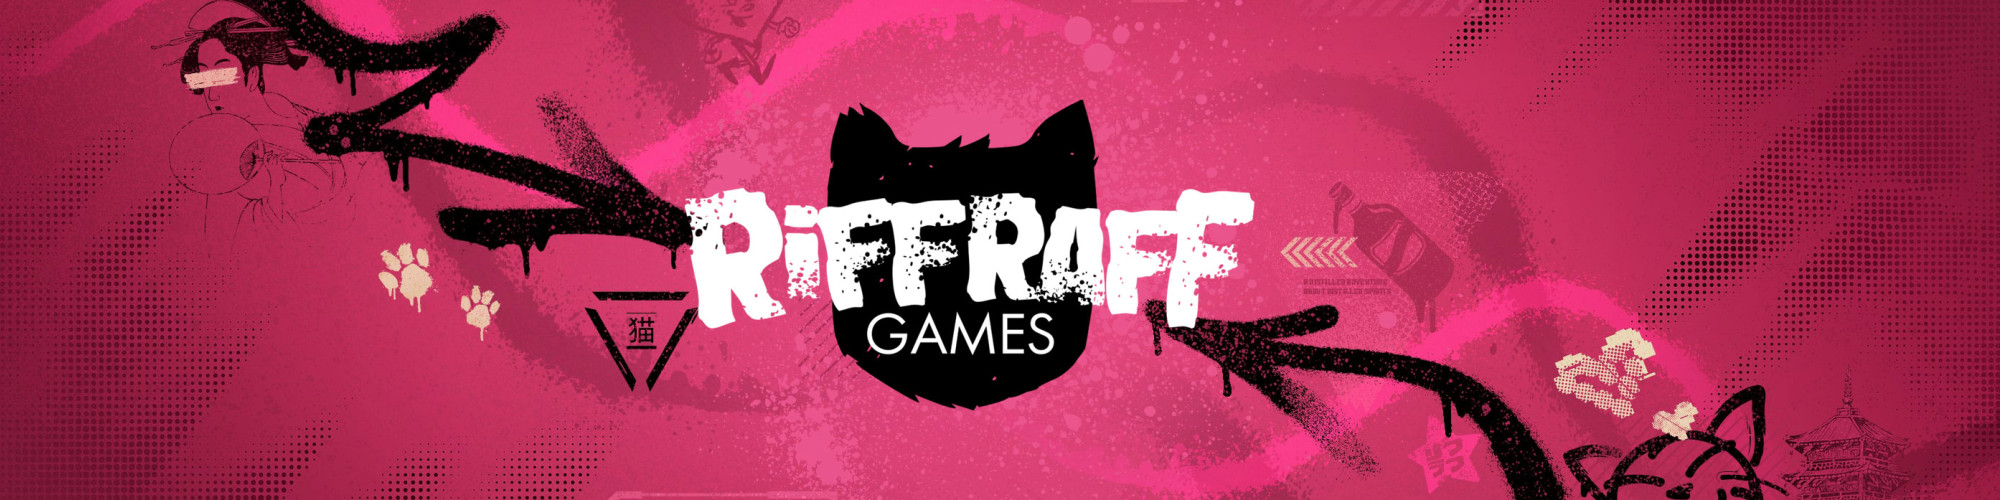 RiffRaff Games